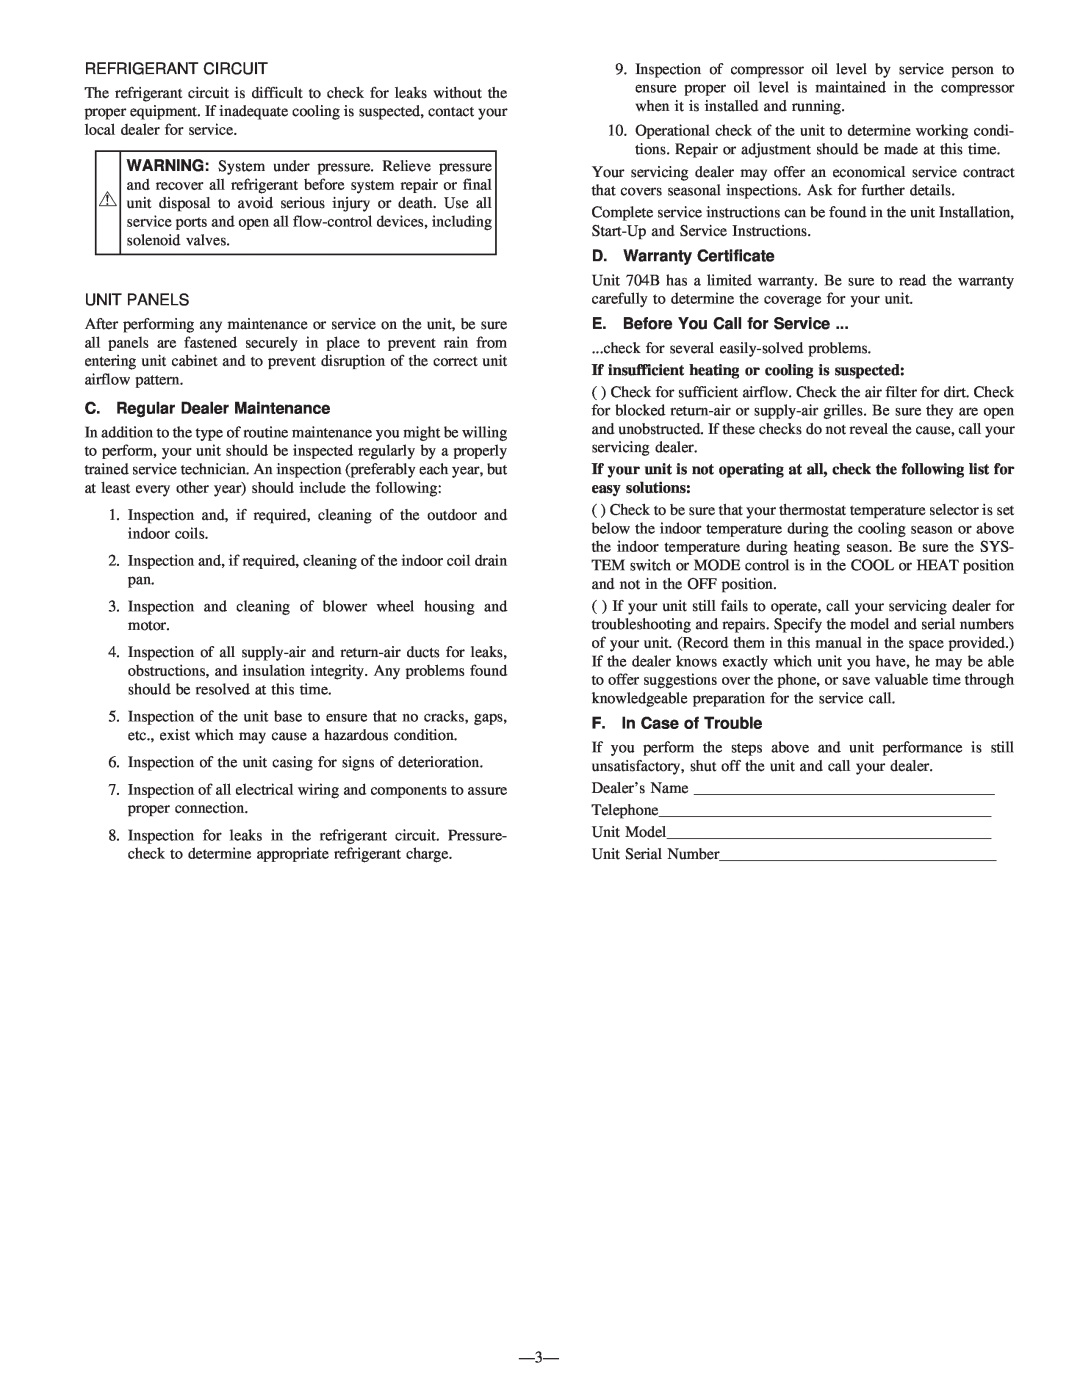 Bryant 704B instruction manual Refrigerant Circuit, Unit Panels, C. Regular Dealer Maintenance, D. Warranty Certificate 